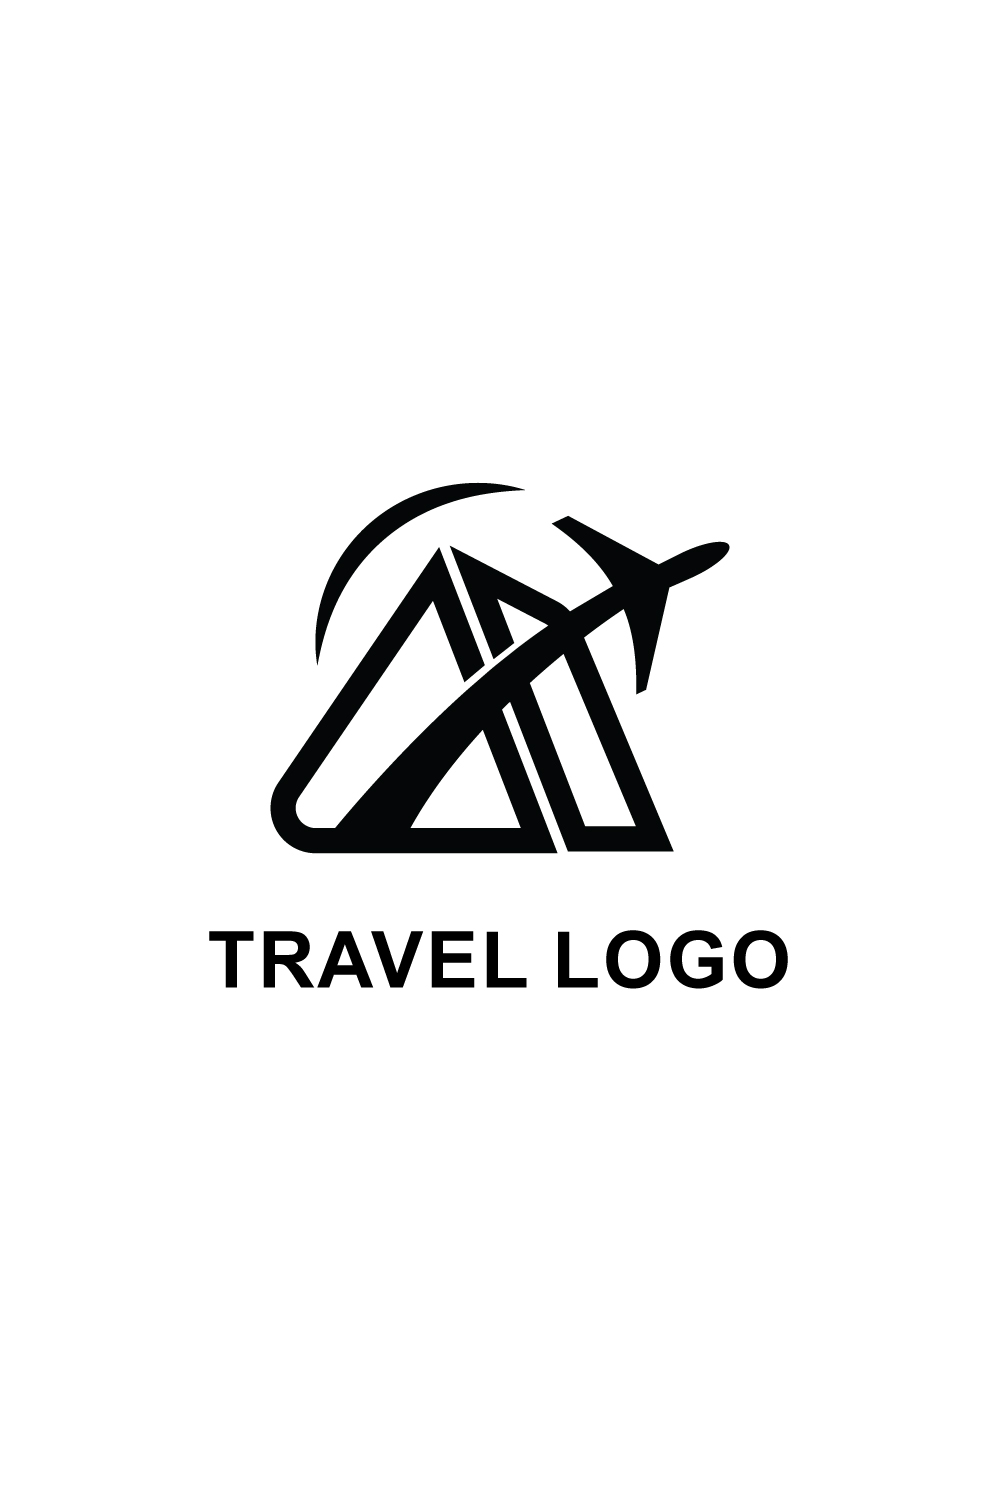 Travel Logo pinterest preview image.